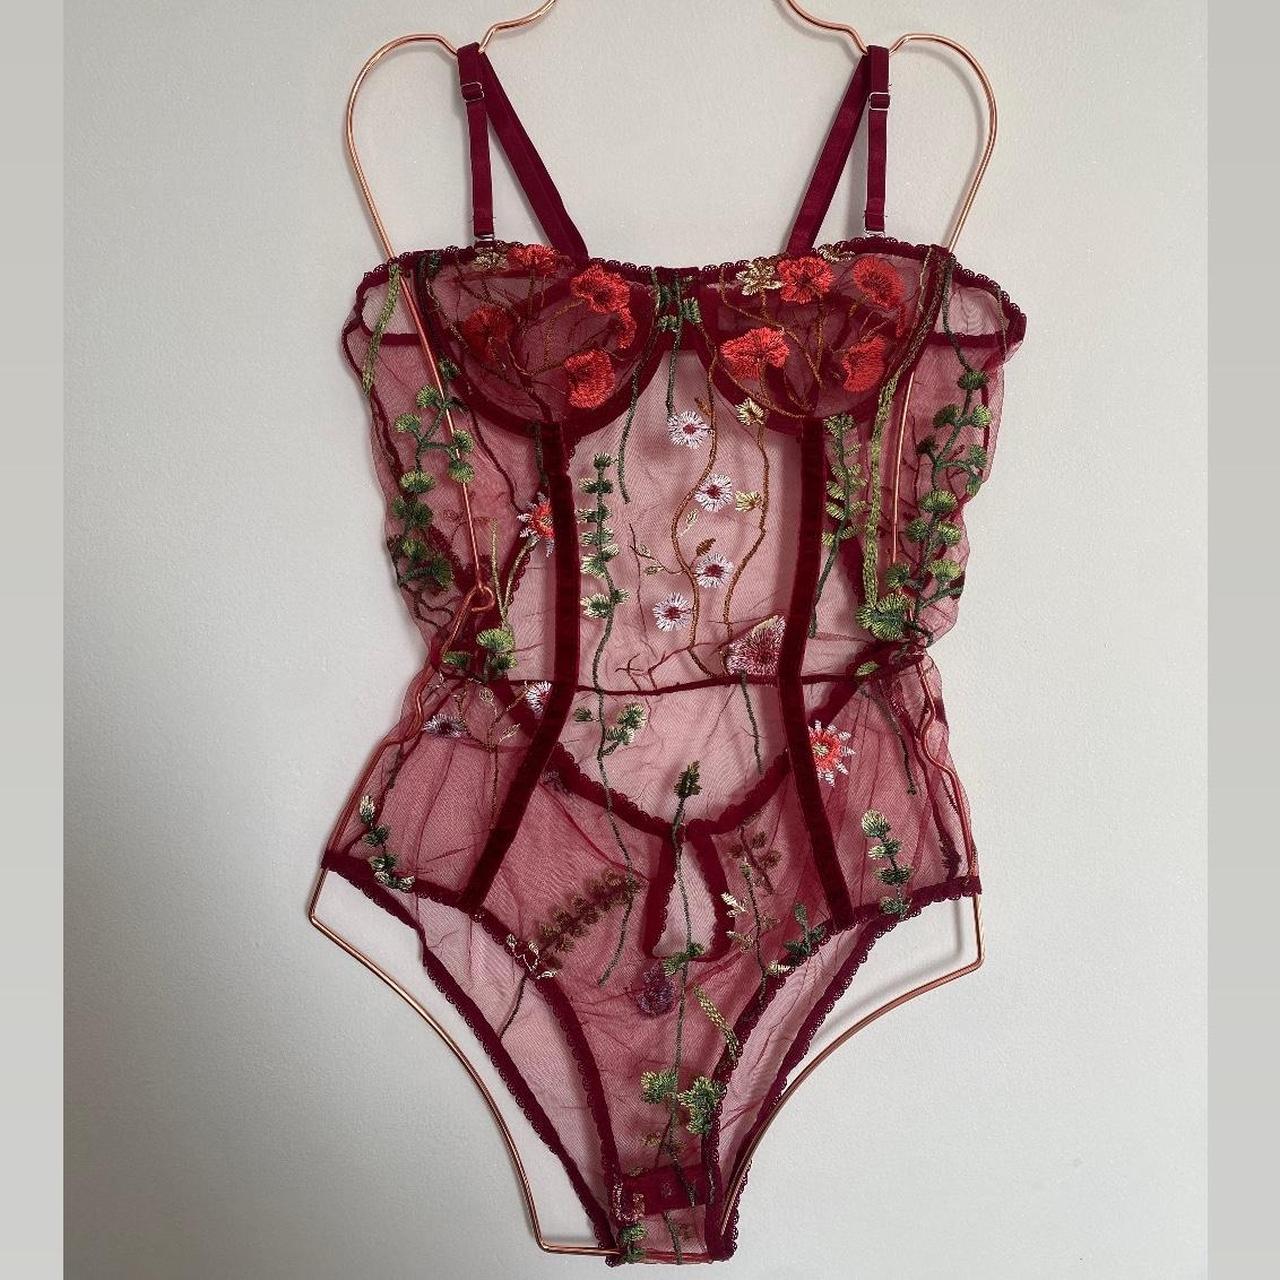 Red/Burgundy Floral Bodysuit, Size 14-16 ️ Open To... - Depop